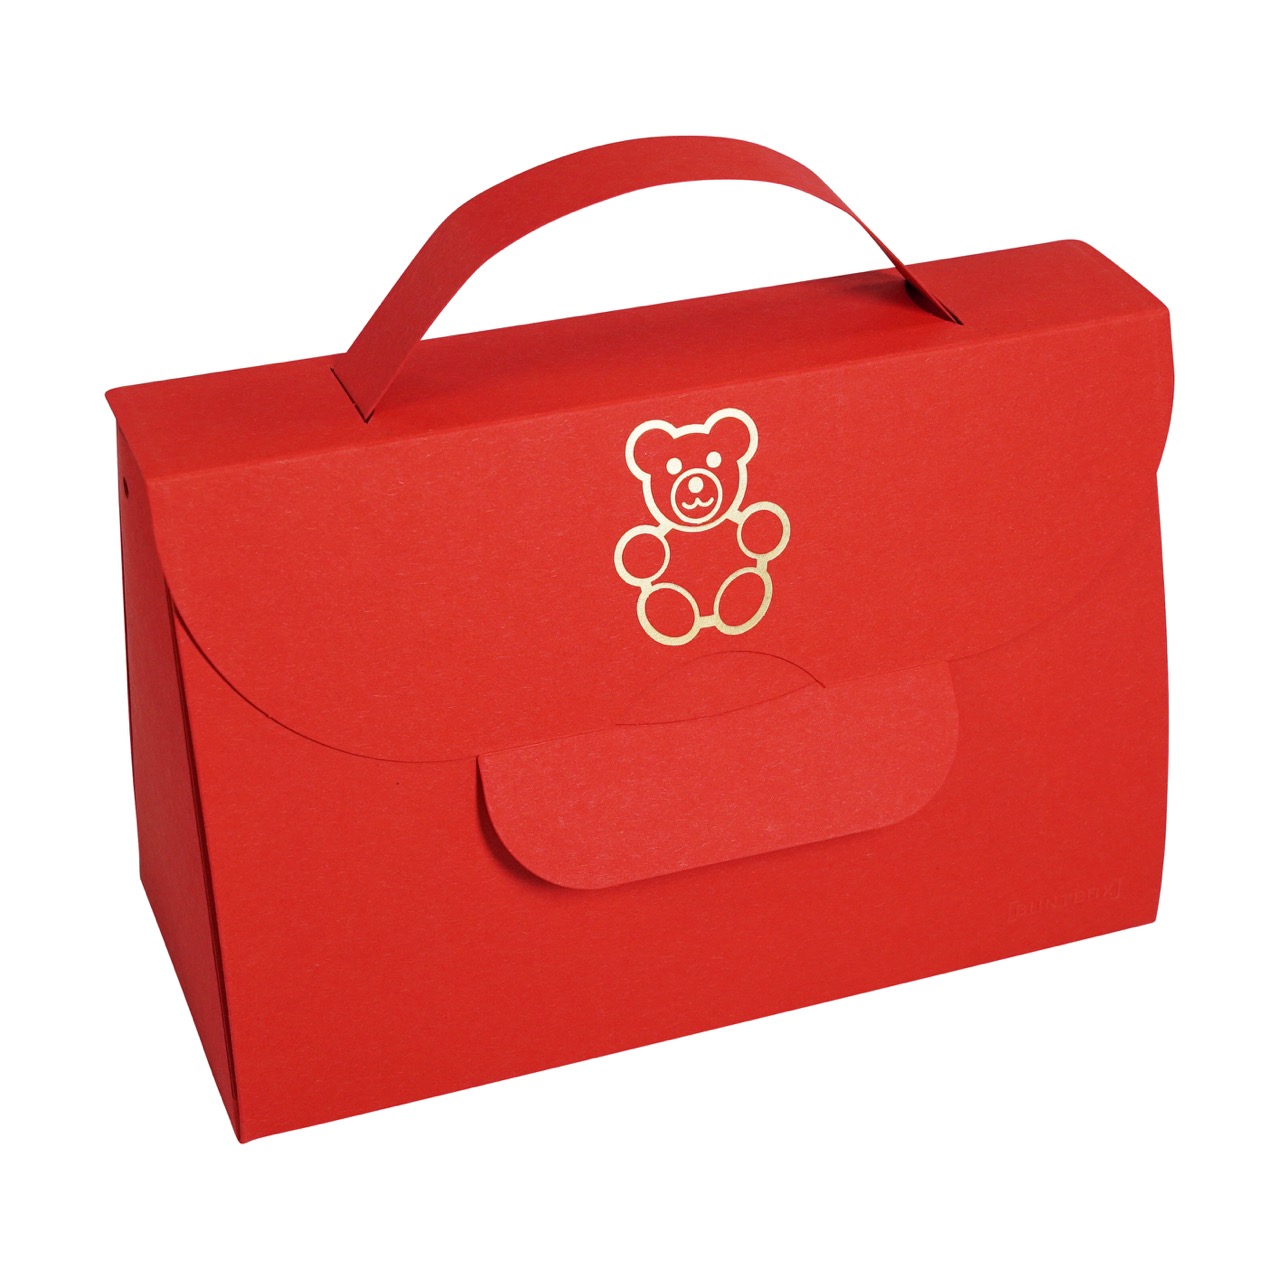 Buntbox Handbag XL Goldener Teddy in Rubin